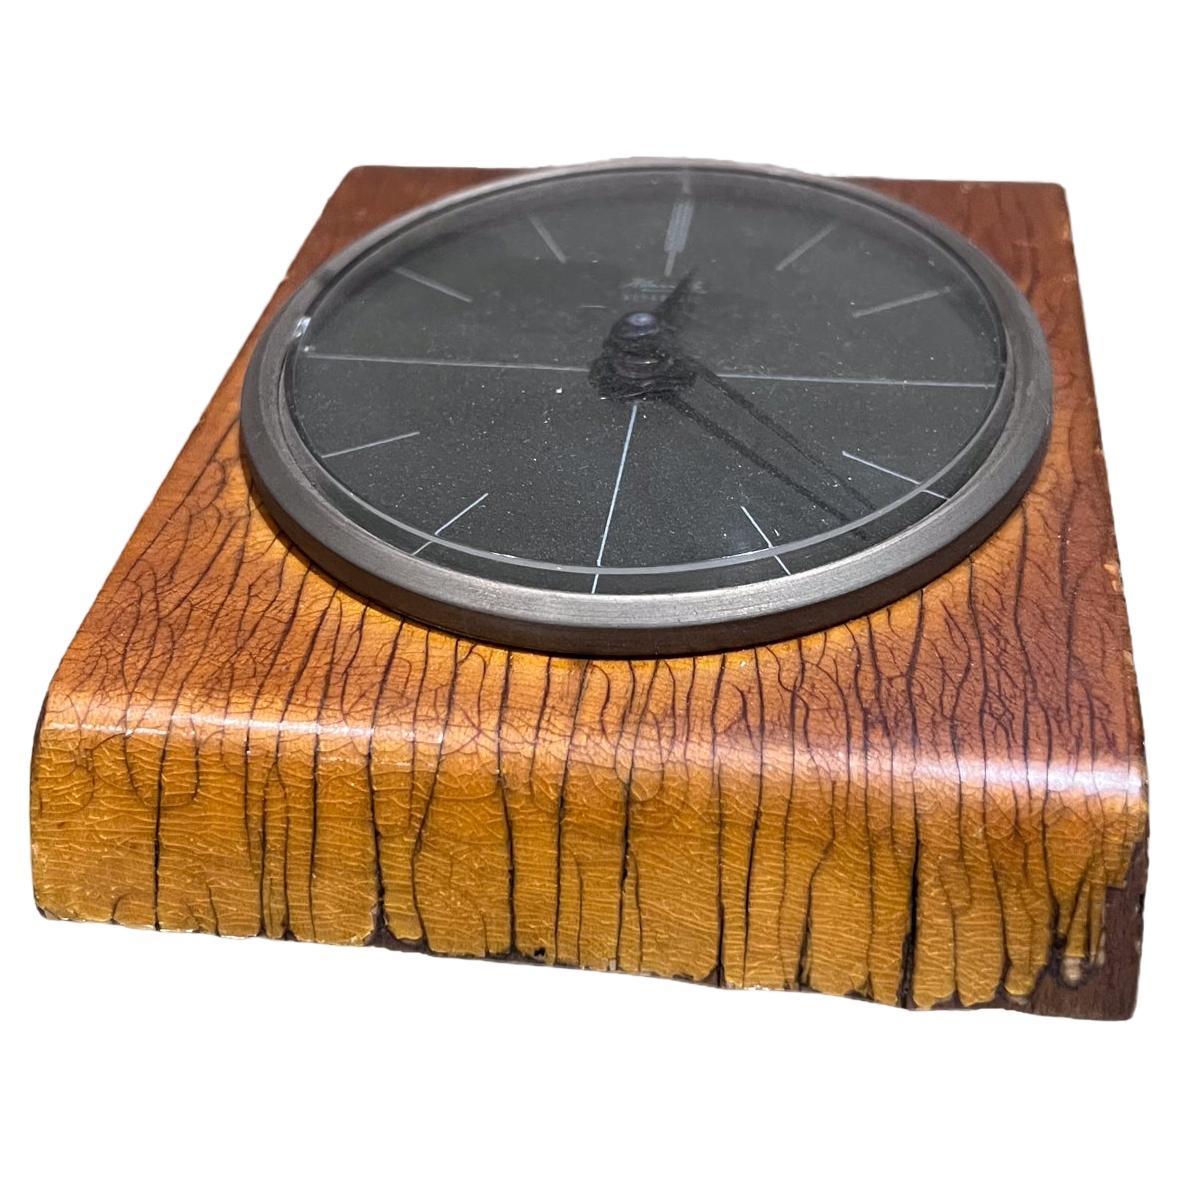 1960s Kienzle Bentwood Desk Clock Germany restored For Sale